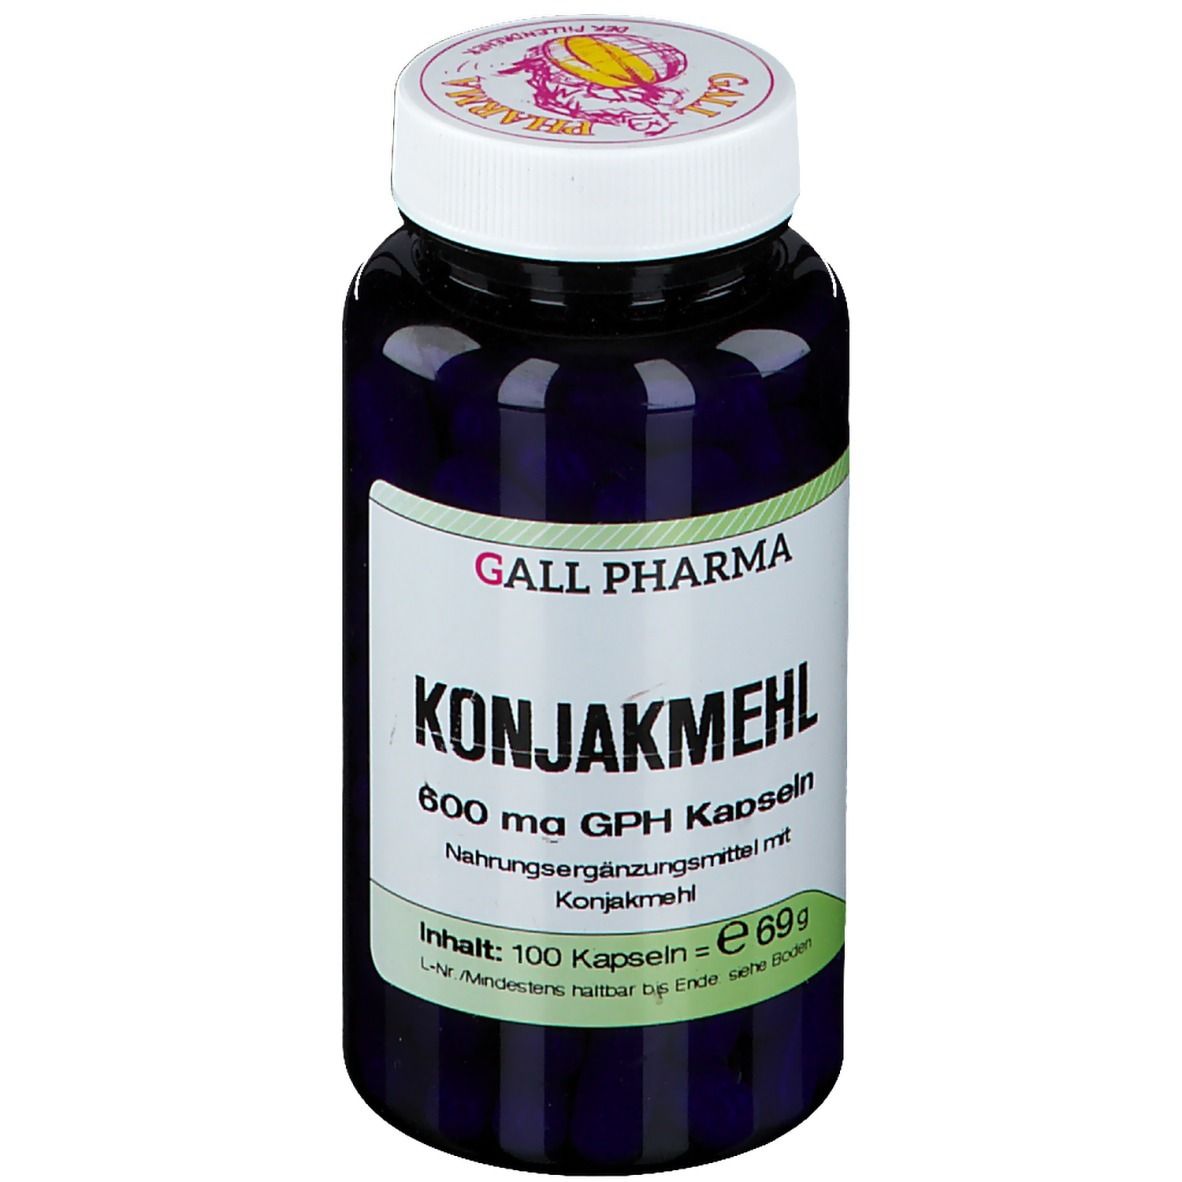 GALL PHARMA Hecht Konjakmehl 600 mg